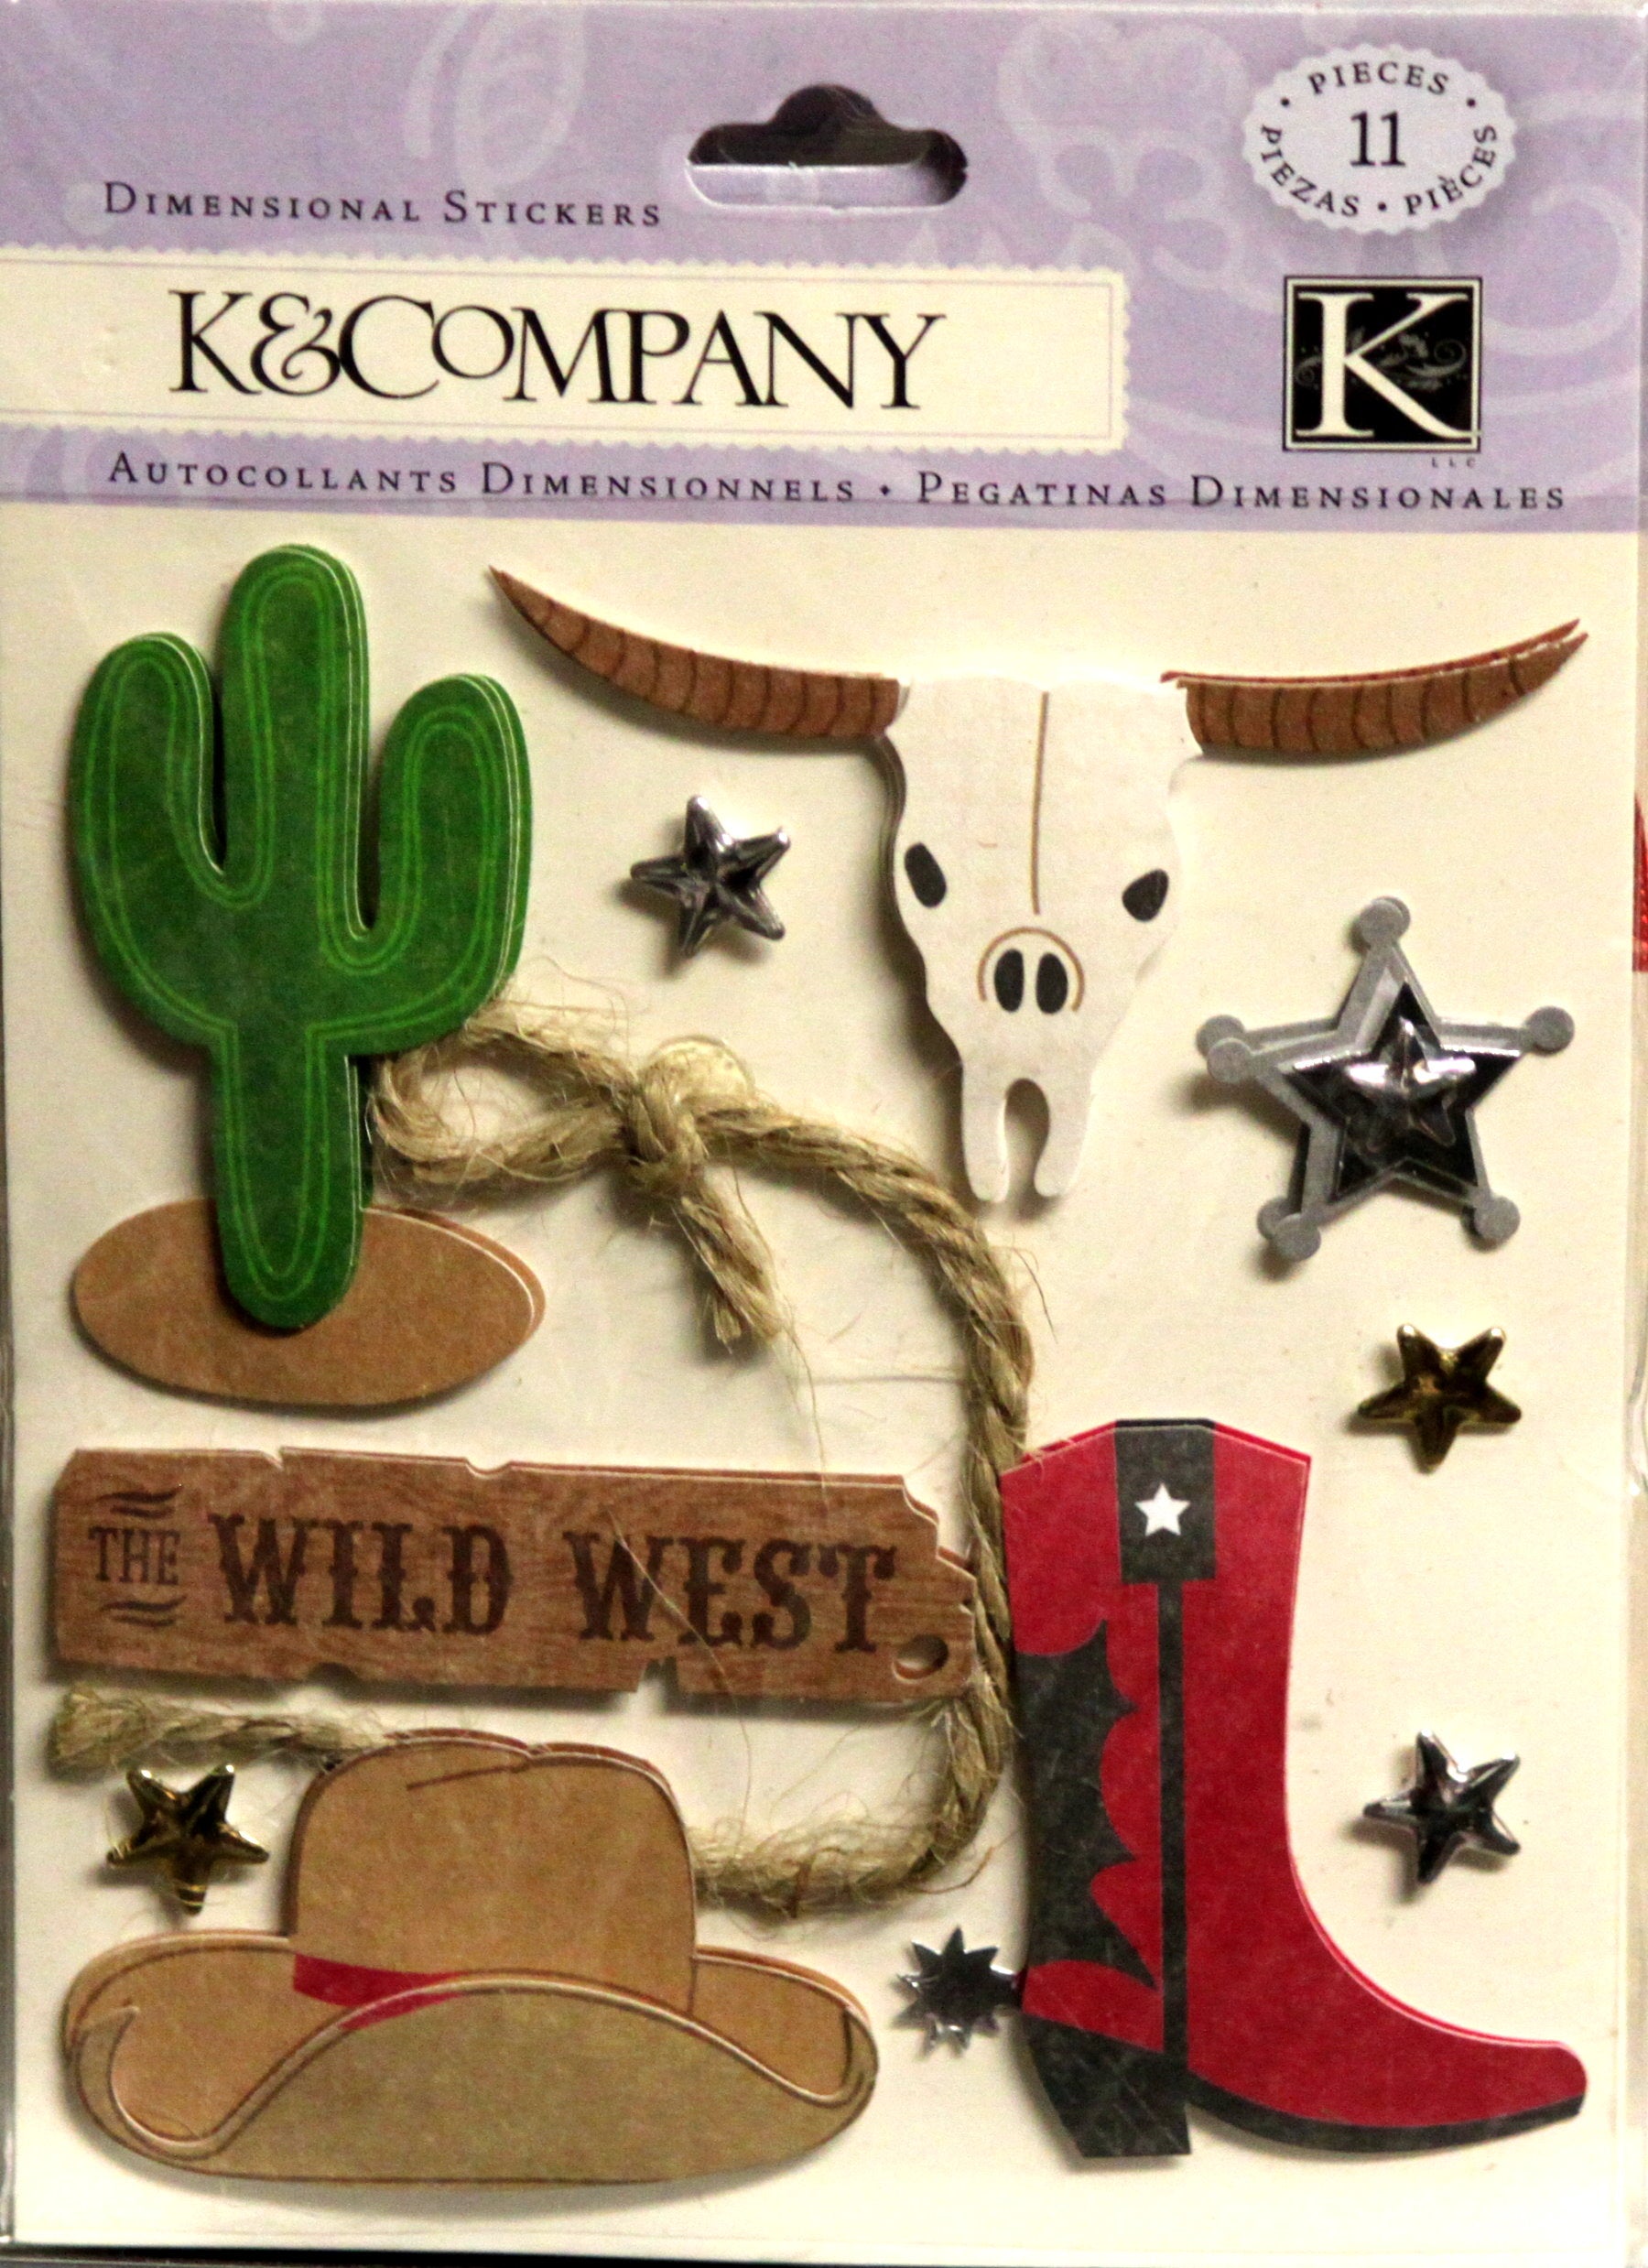 K & Company Cowboy Dimensional Stickers